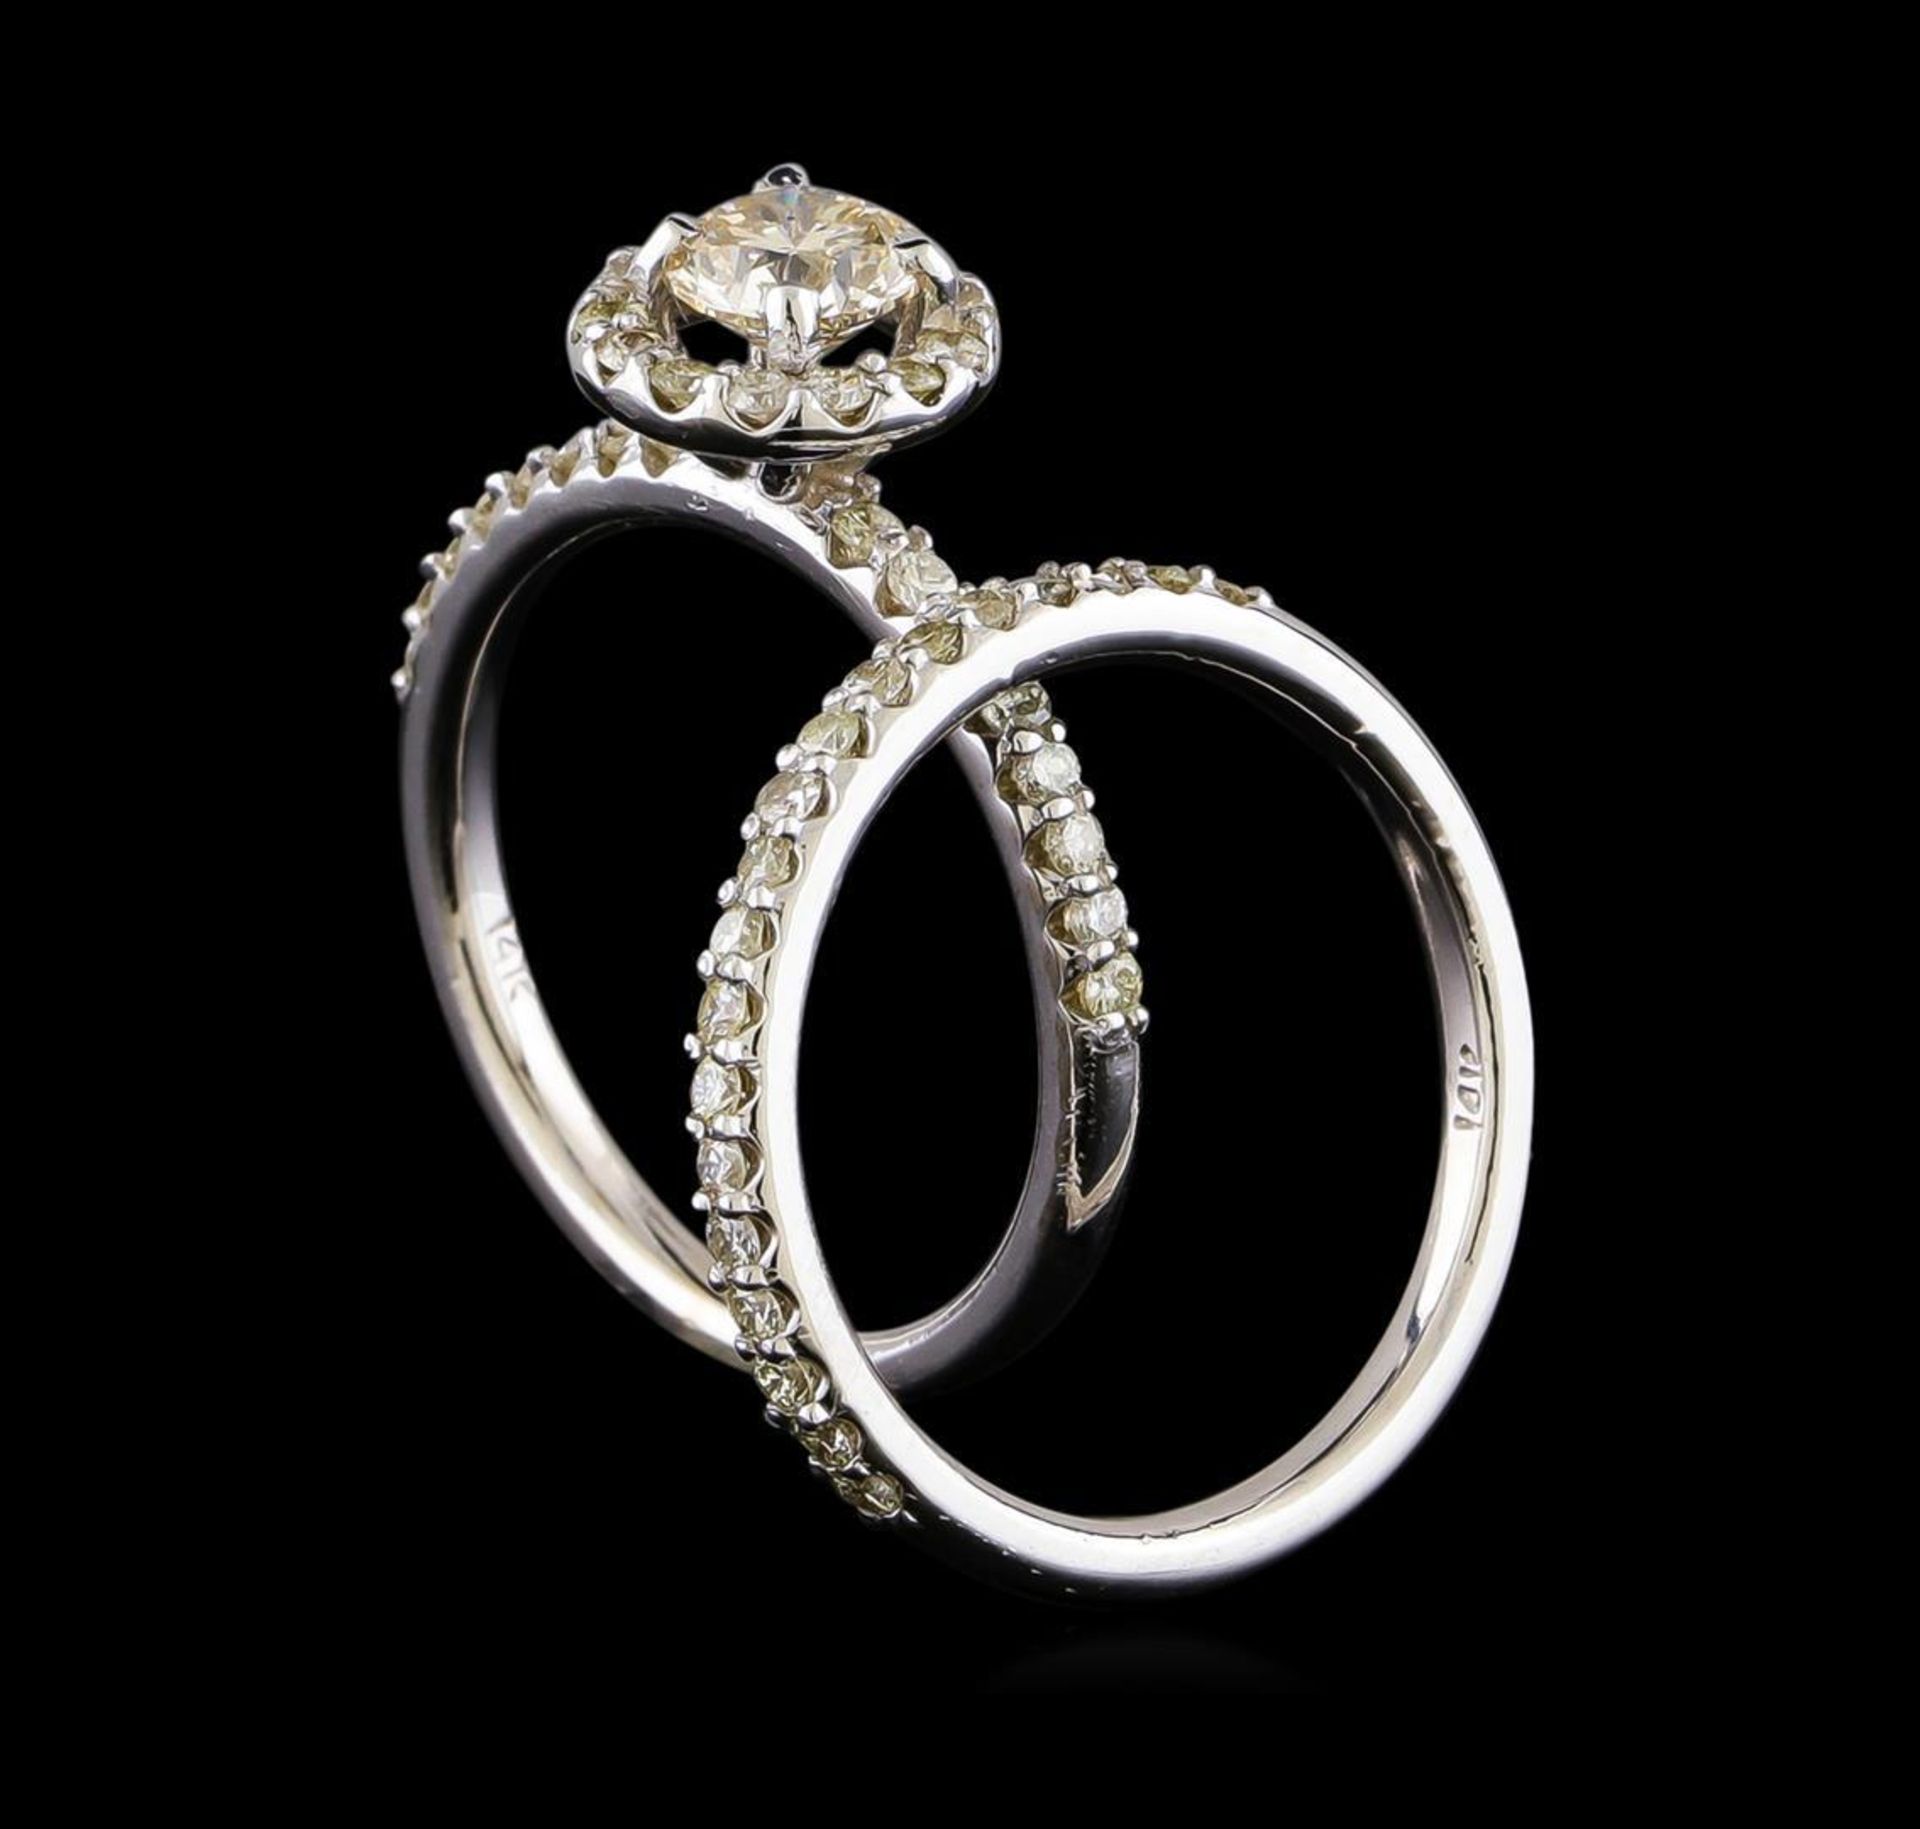 1.17ctw Diamond Wedding Ring Set - 14KT White Gold - Image 3 of 4